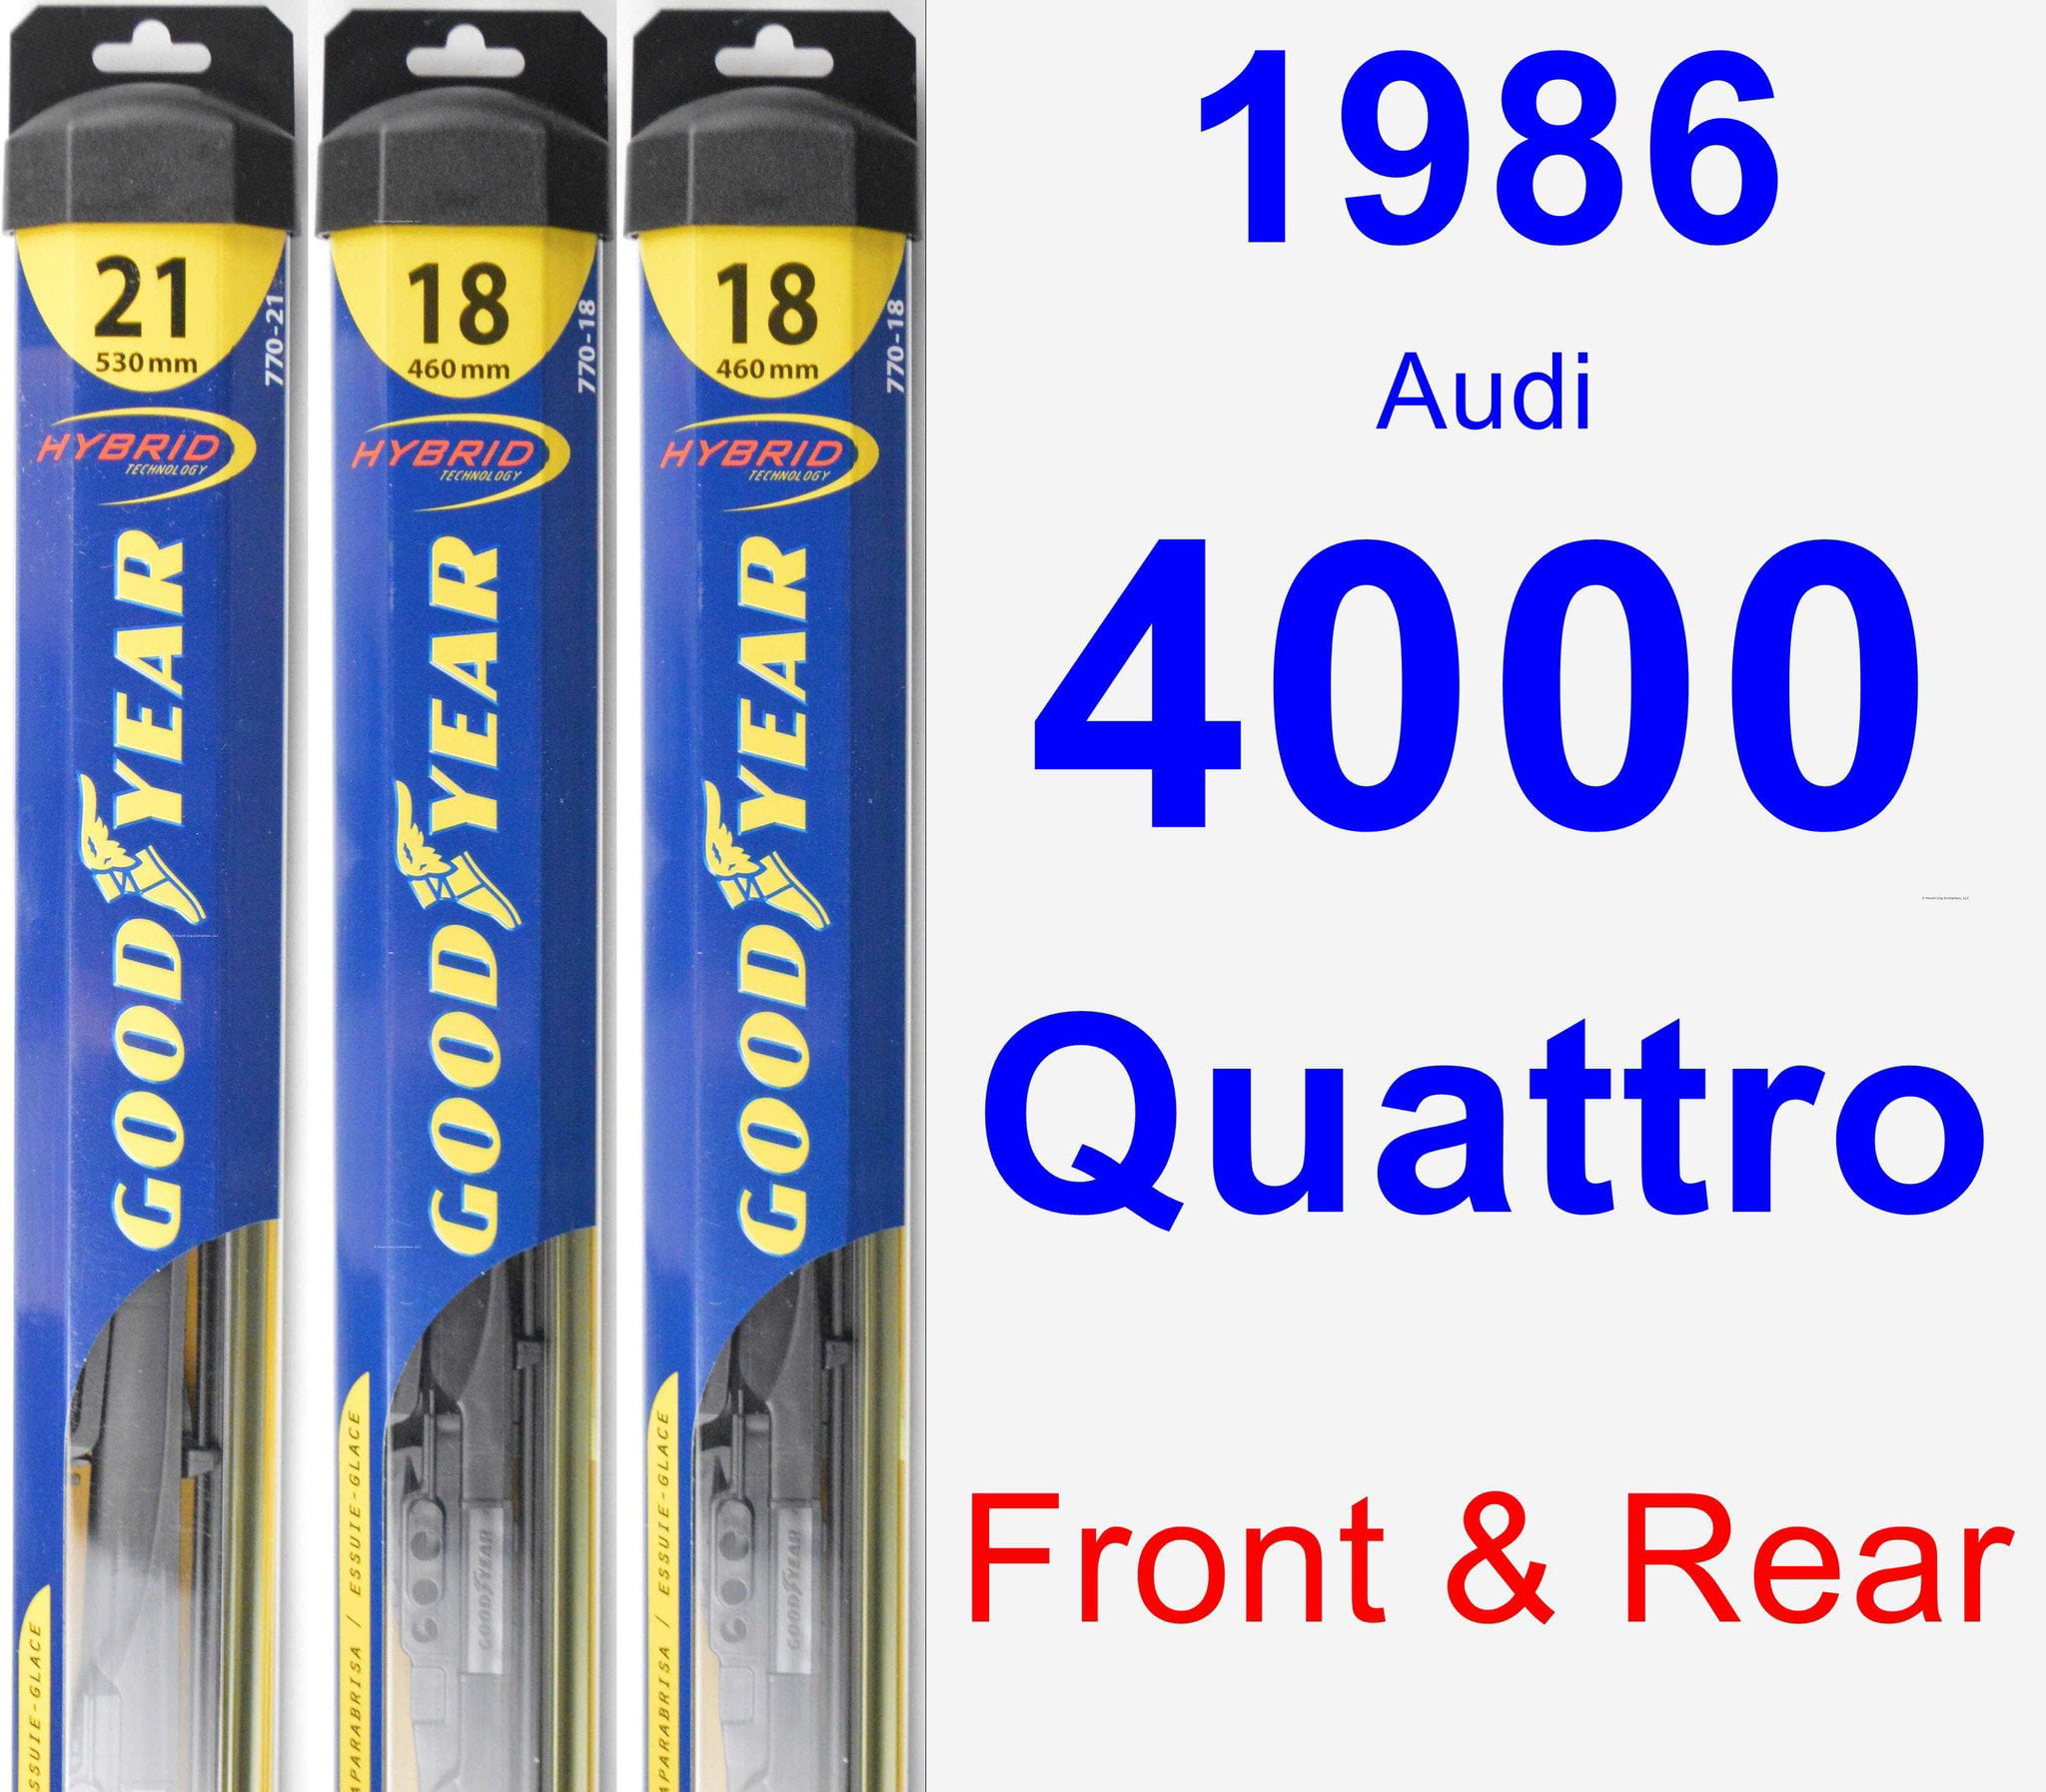 1986 Audi 4000 Quattro Wiper Blade Set/Kit (Front amp; Rear) (3 Blades)  Hybrid